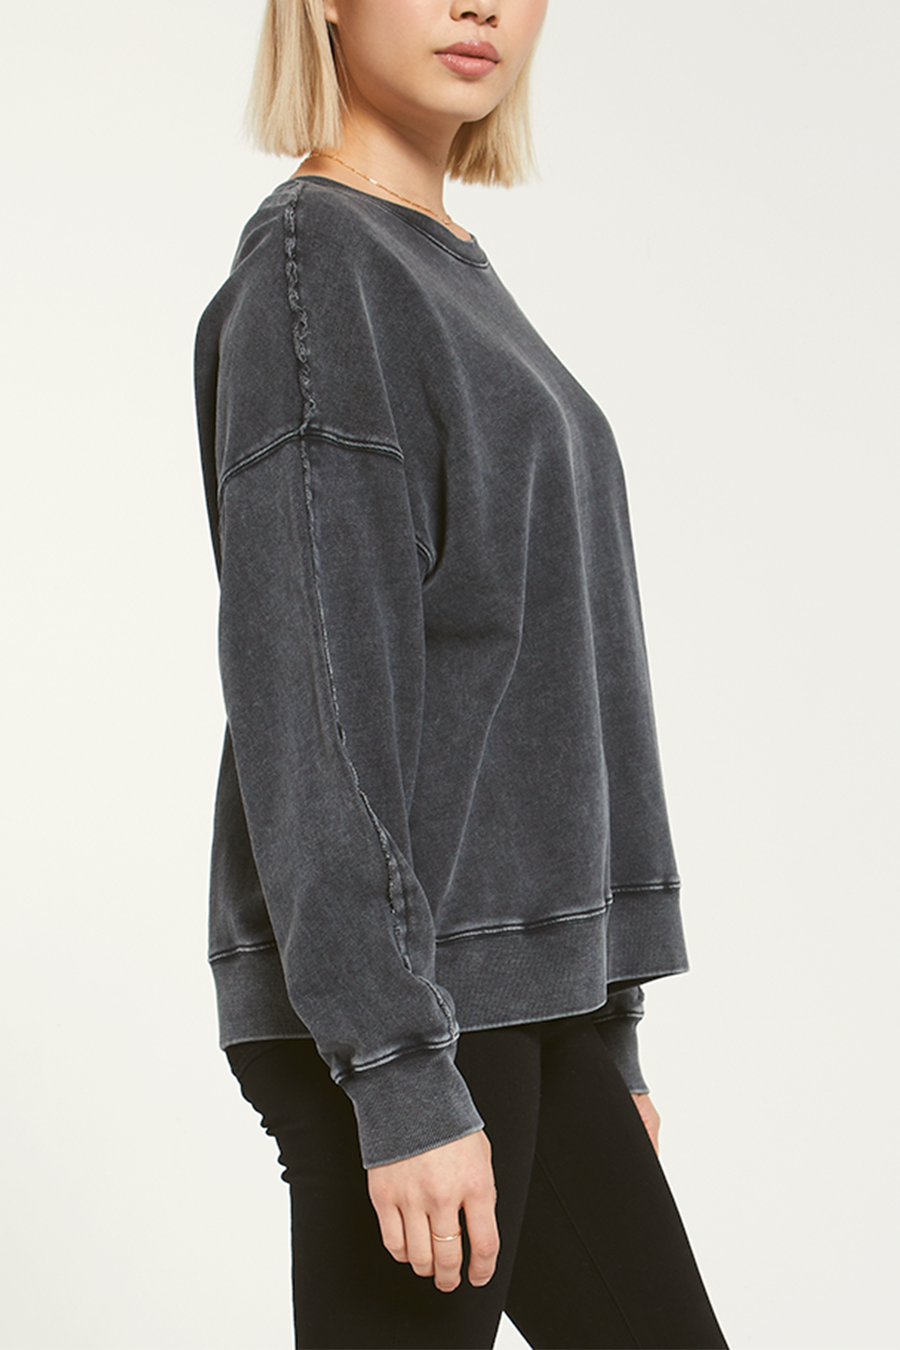 Kyro Sweatshirt | Washed Black - Main Image Number 2 of 3